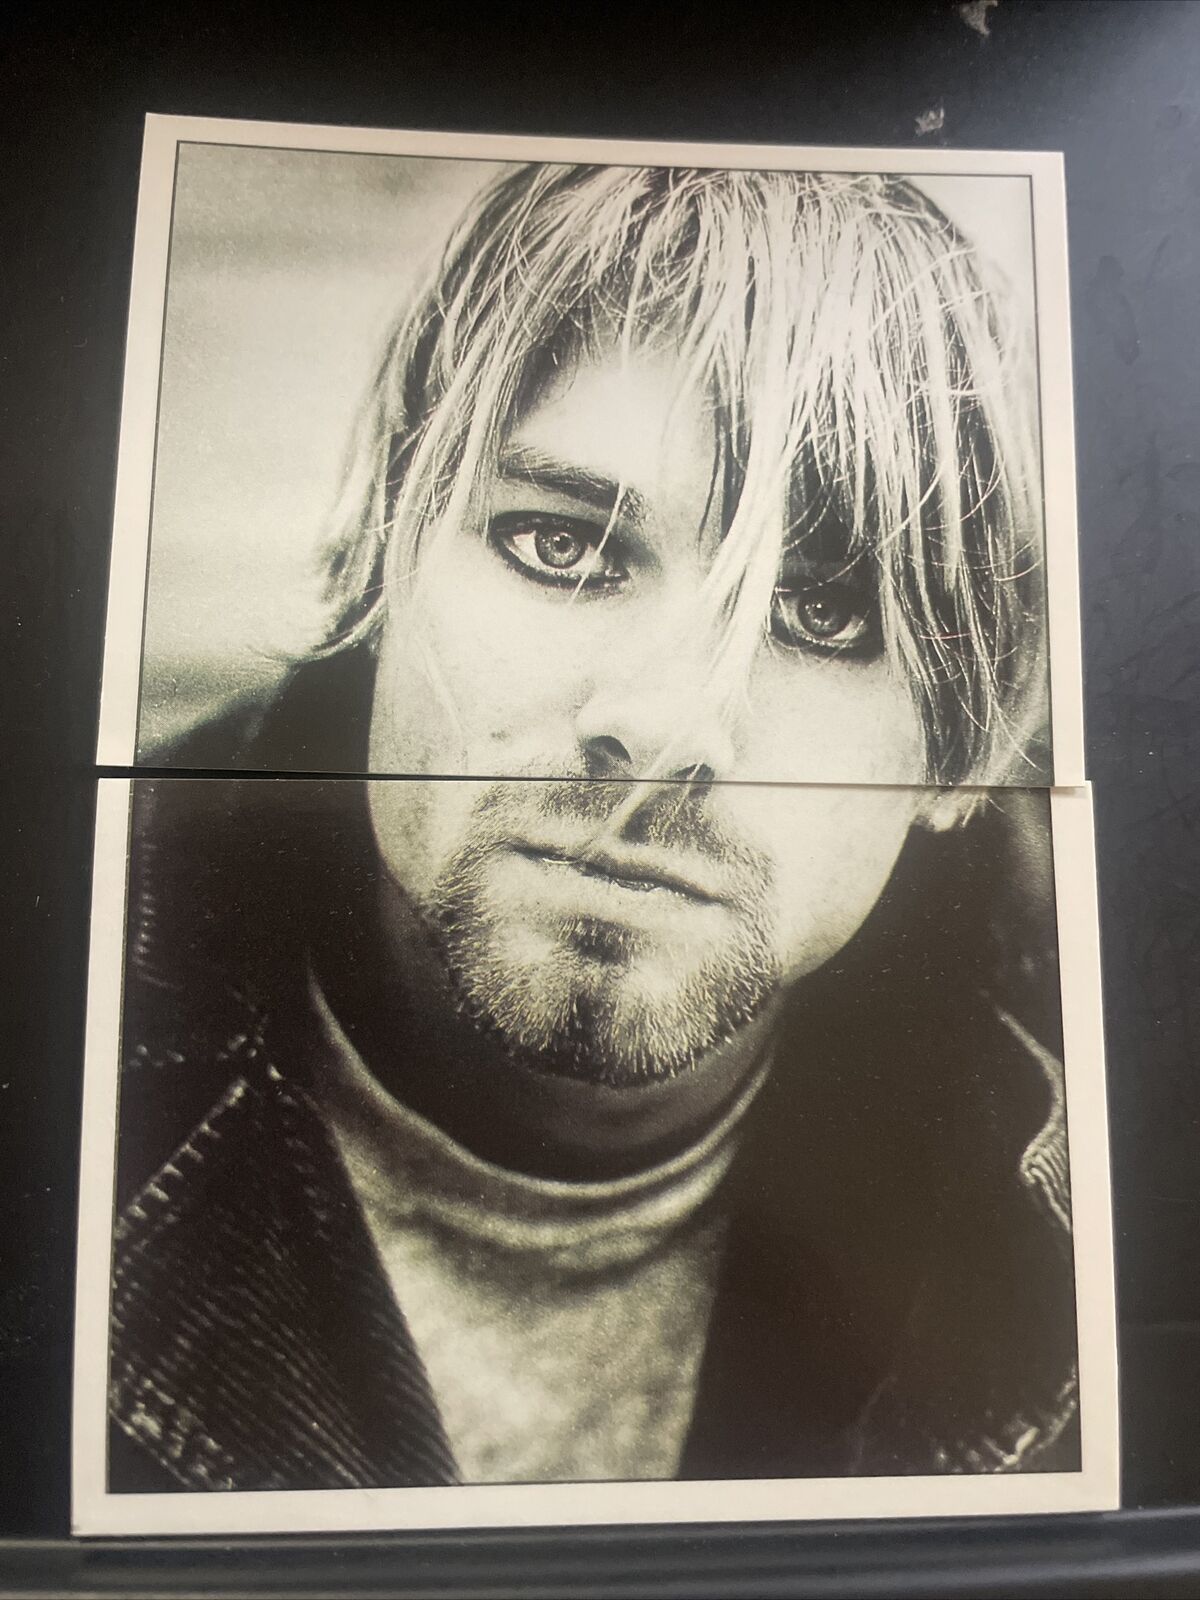 1995 Panini Smash Hits Album Stickers #95 &96 Kurt Cobain of Nirvana set